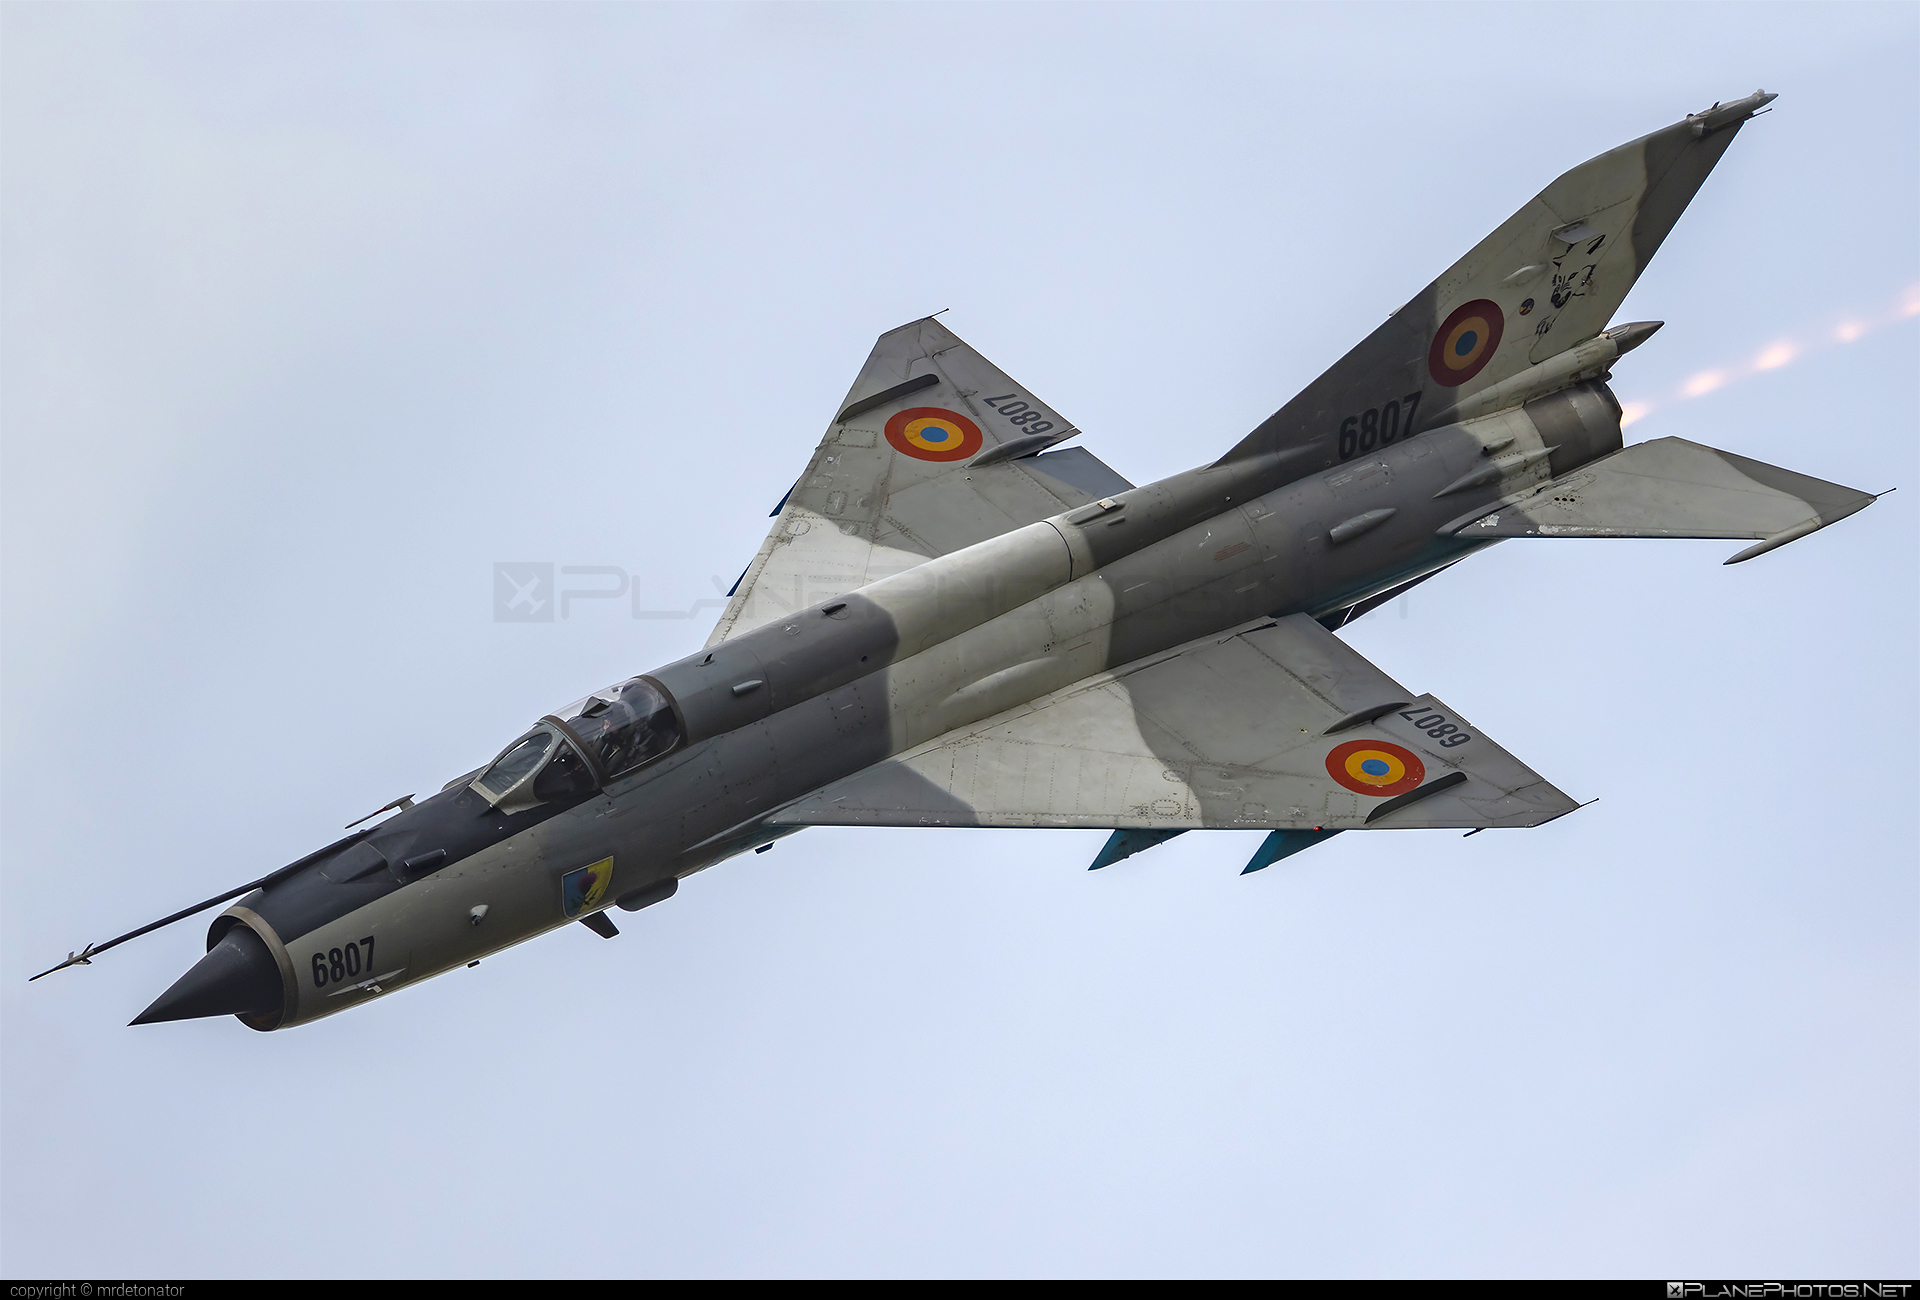 Mikoyan-Gurevich MiG-21MF - 6807 operated by Forţele Aeriene Române (Romanian Air Force) #forteleaerieneromane #mig #mig21 #mig21mf #mikoyangurevich #romanianairforce